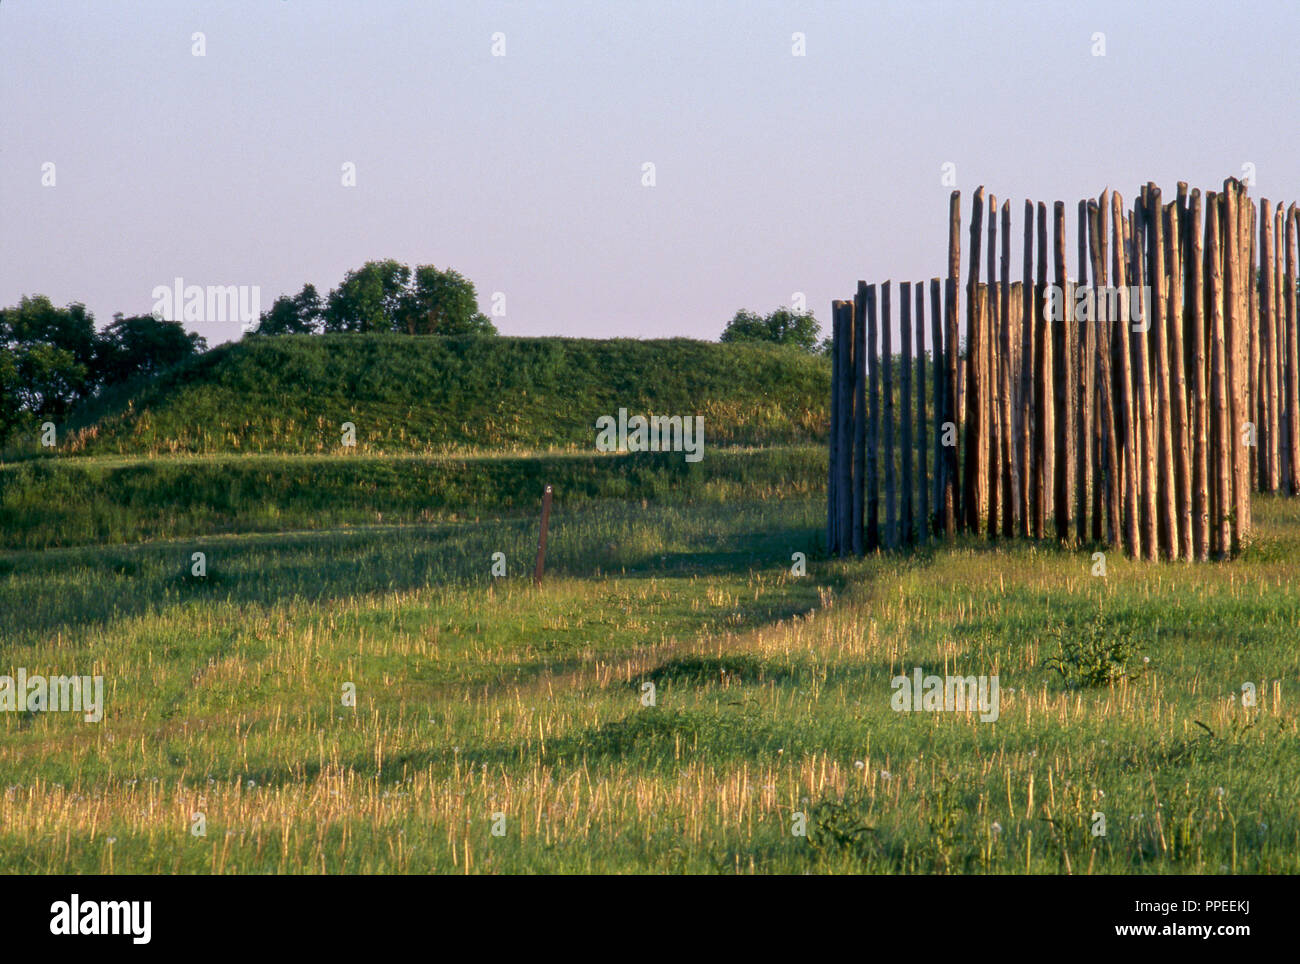 Aztalan, middle Mississippian Moundbuilder site in Wisconsin, mound & part of village stockade. Photograph Stock Photo